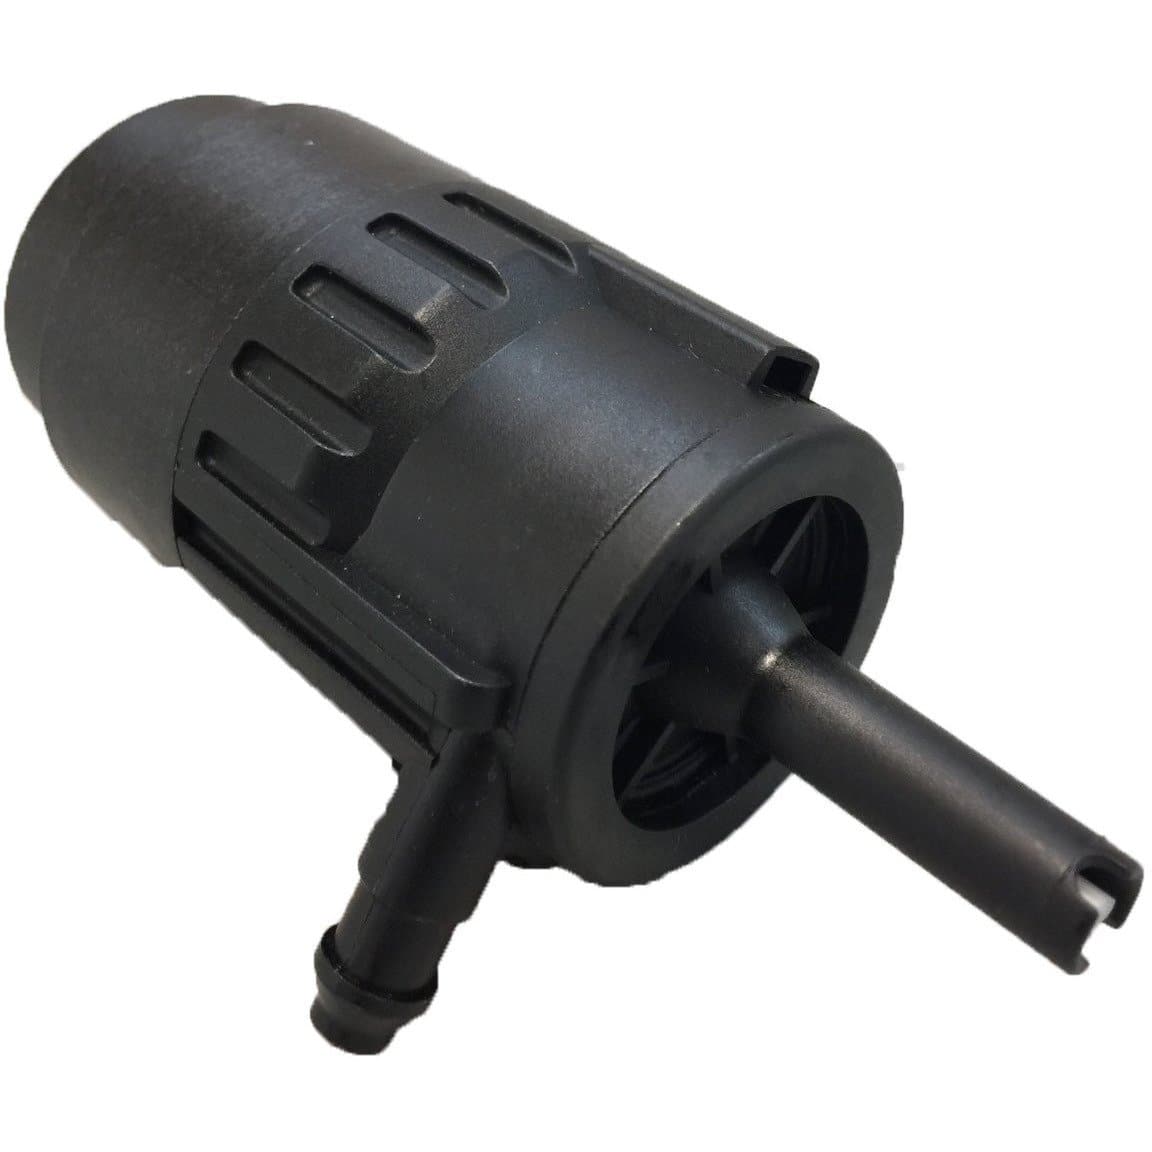 660-11 - Washer Pump - AutoTex